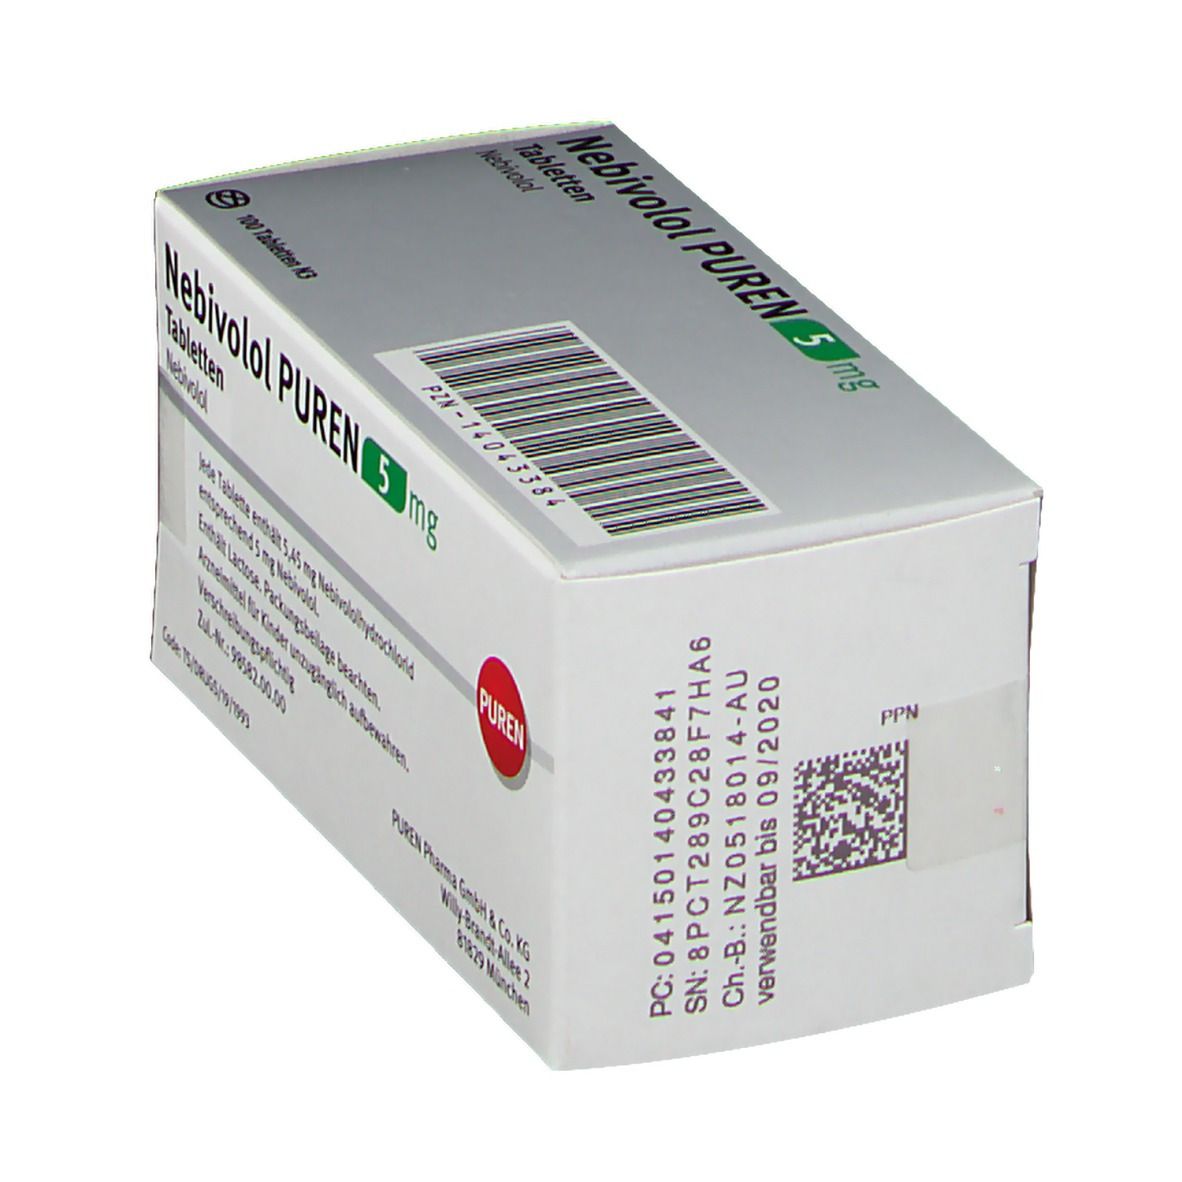 Nebivolol PUREN 5 mg